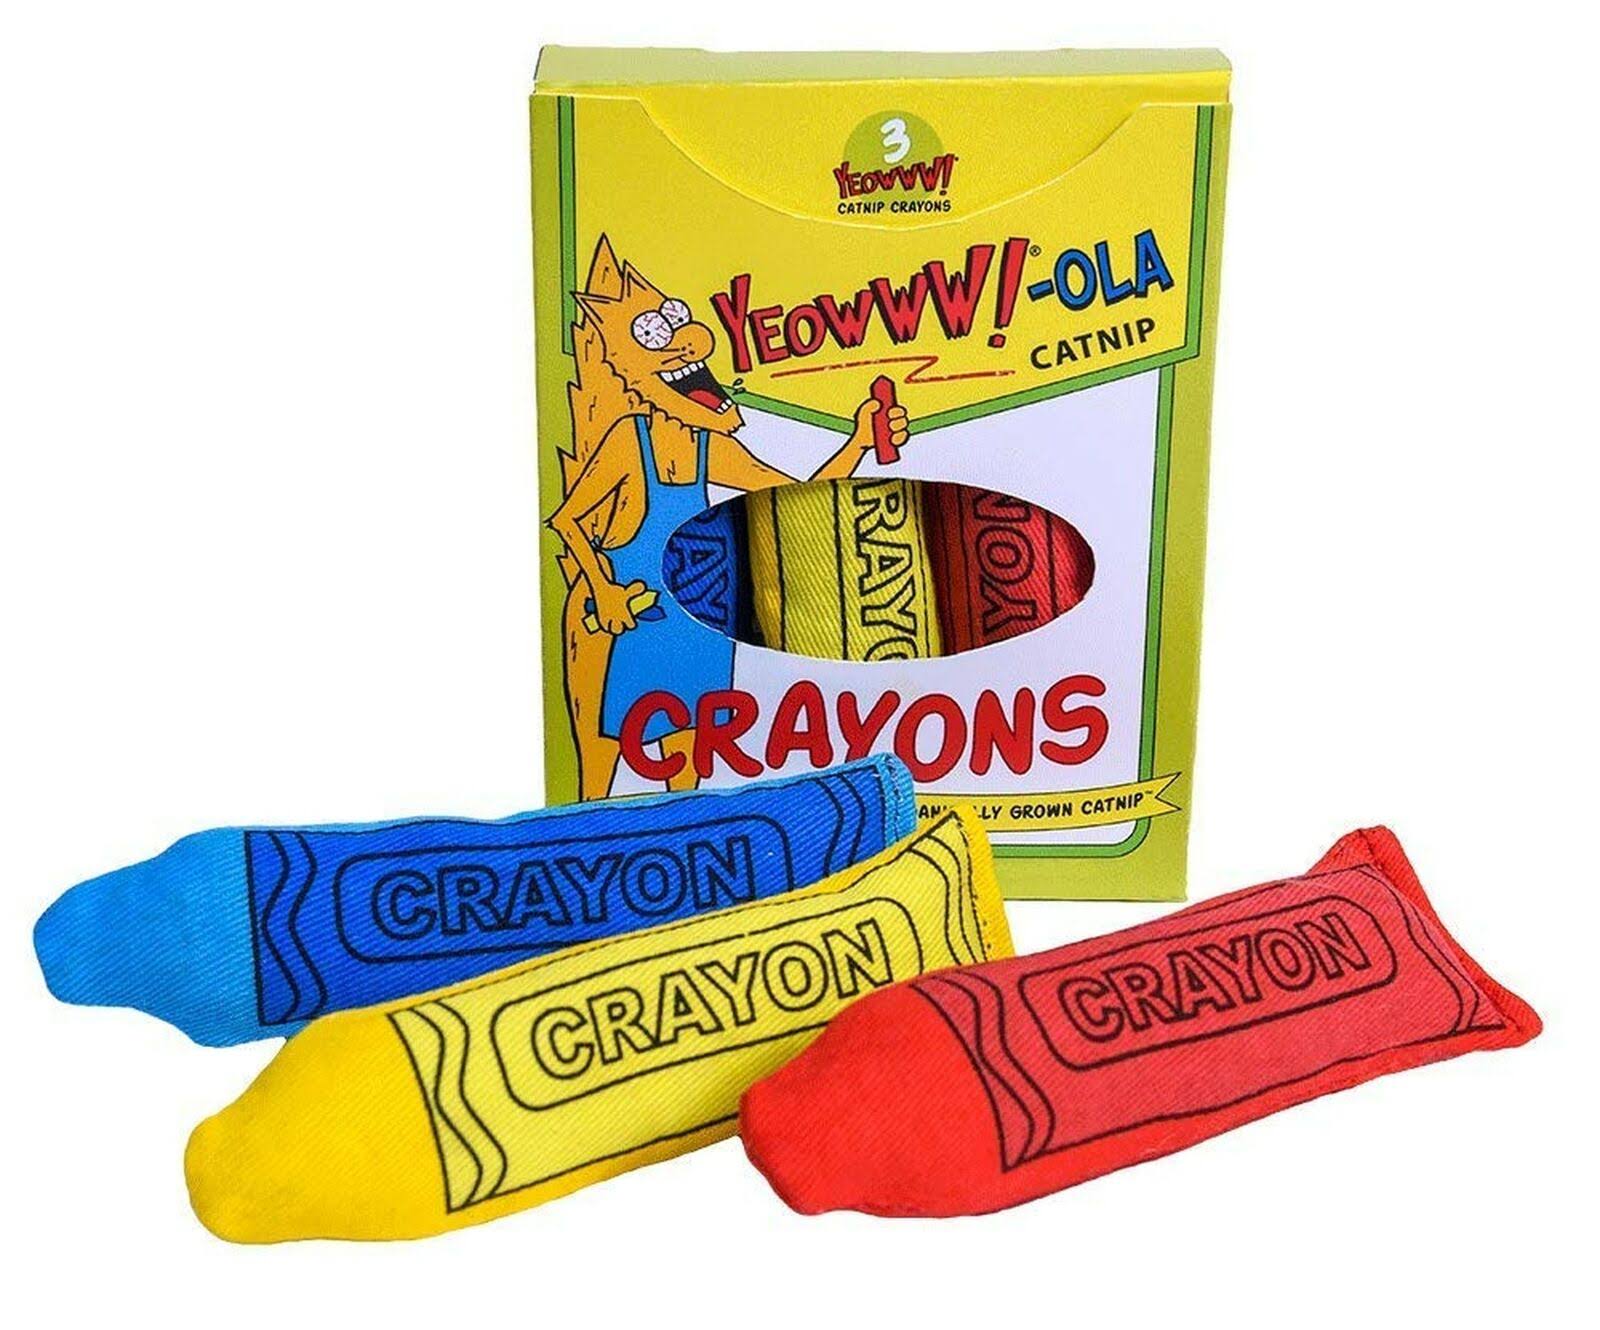 Yeowww!-ola Crayon - 3 Pack